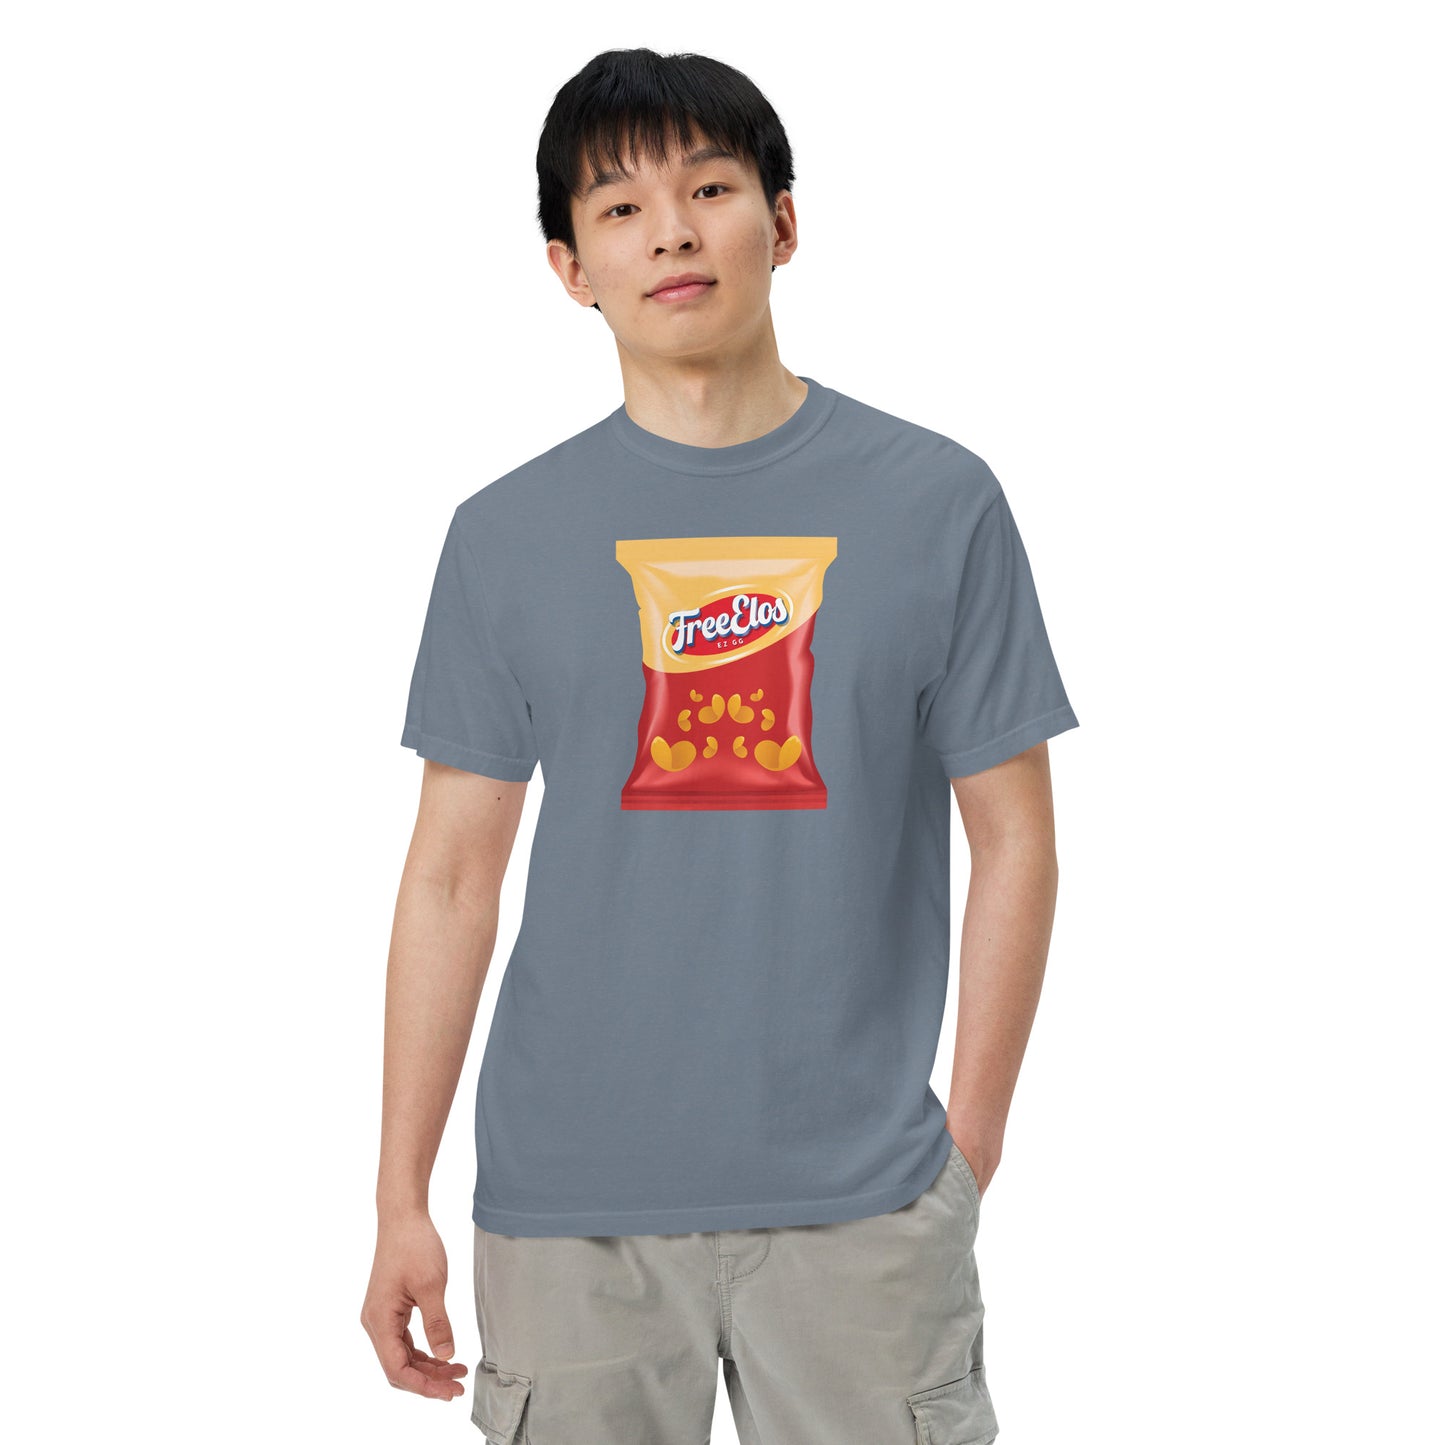 Free Elo T-Shirt